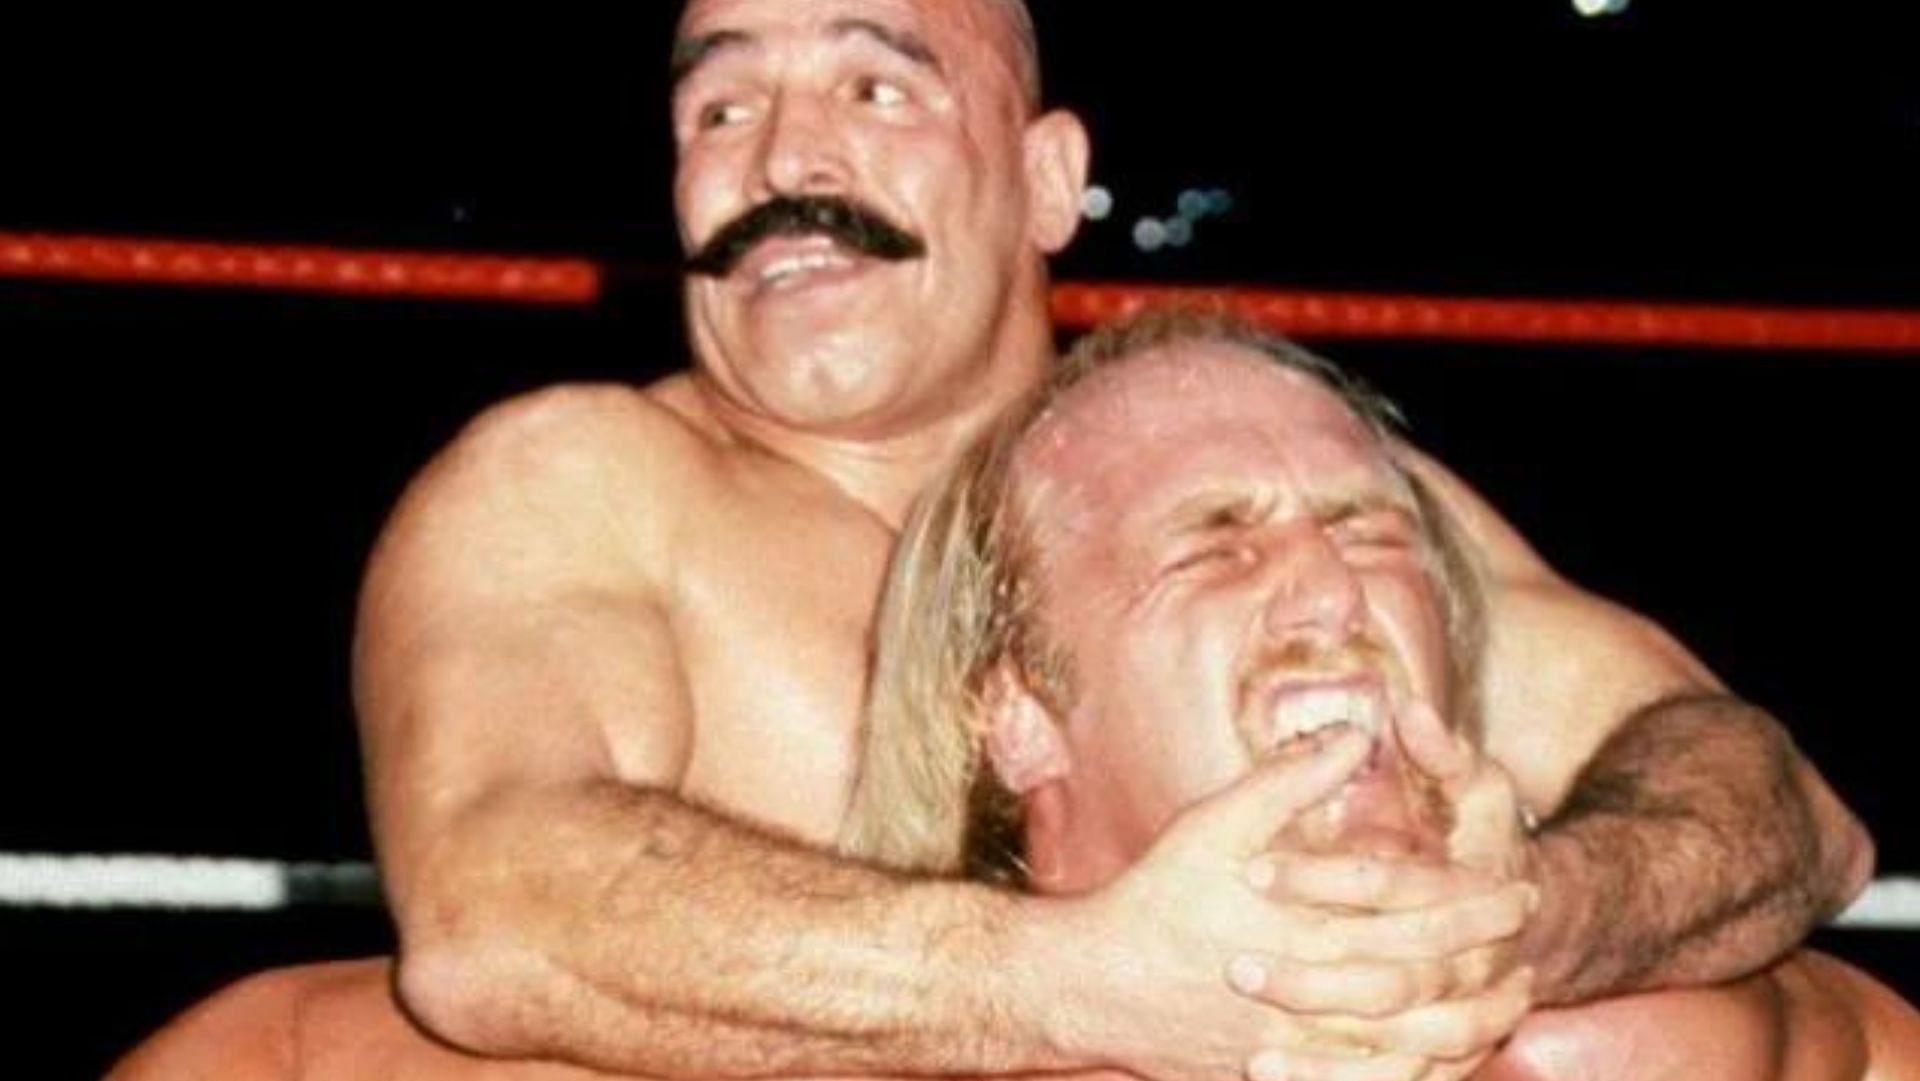 The Iron Sheik lost the WWE Championship to Hulk Hogan.